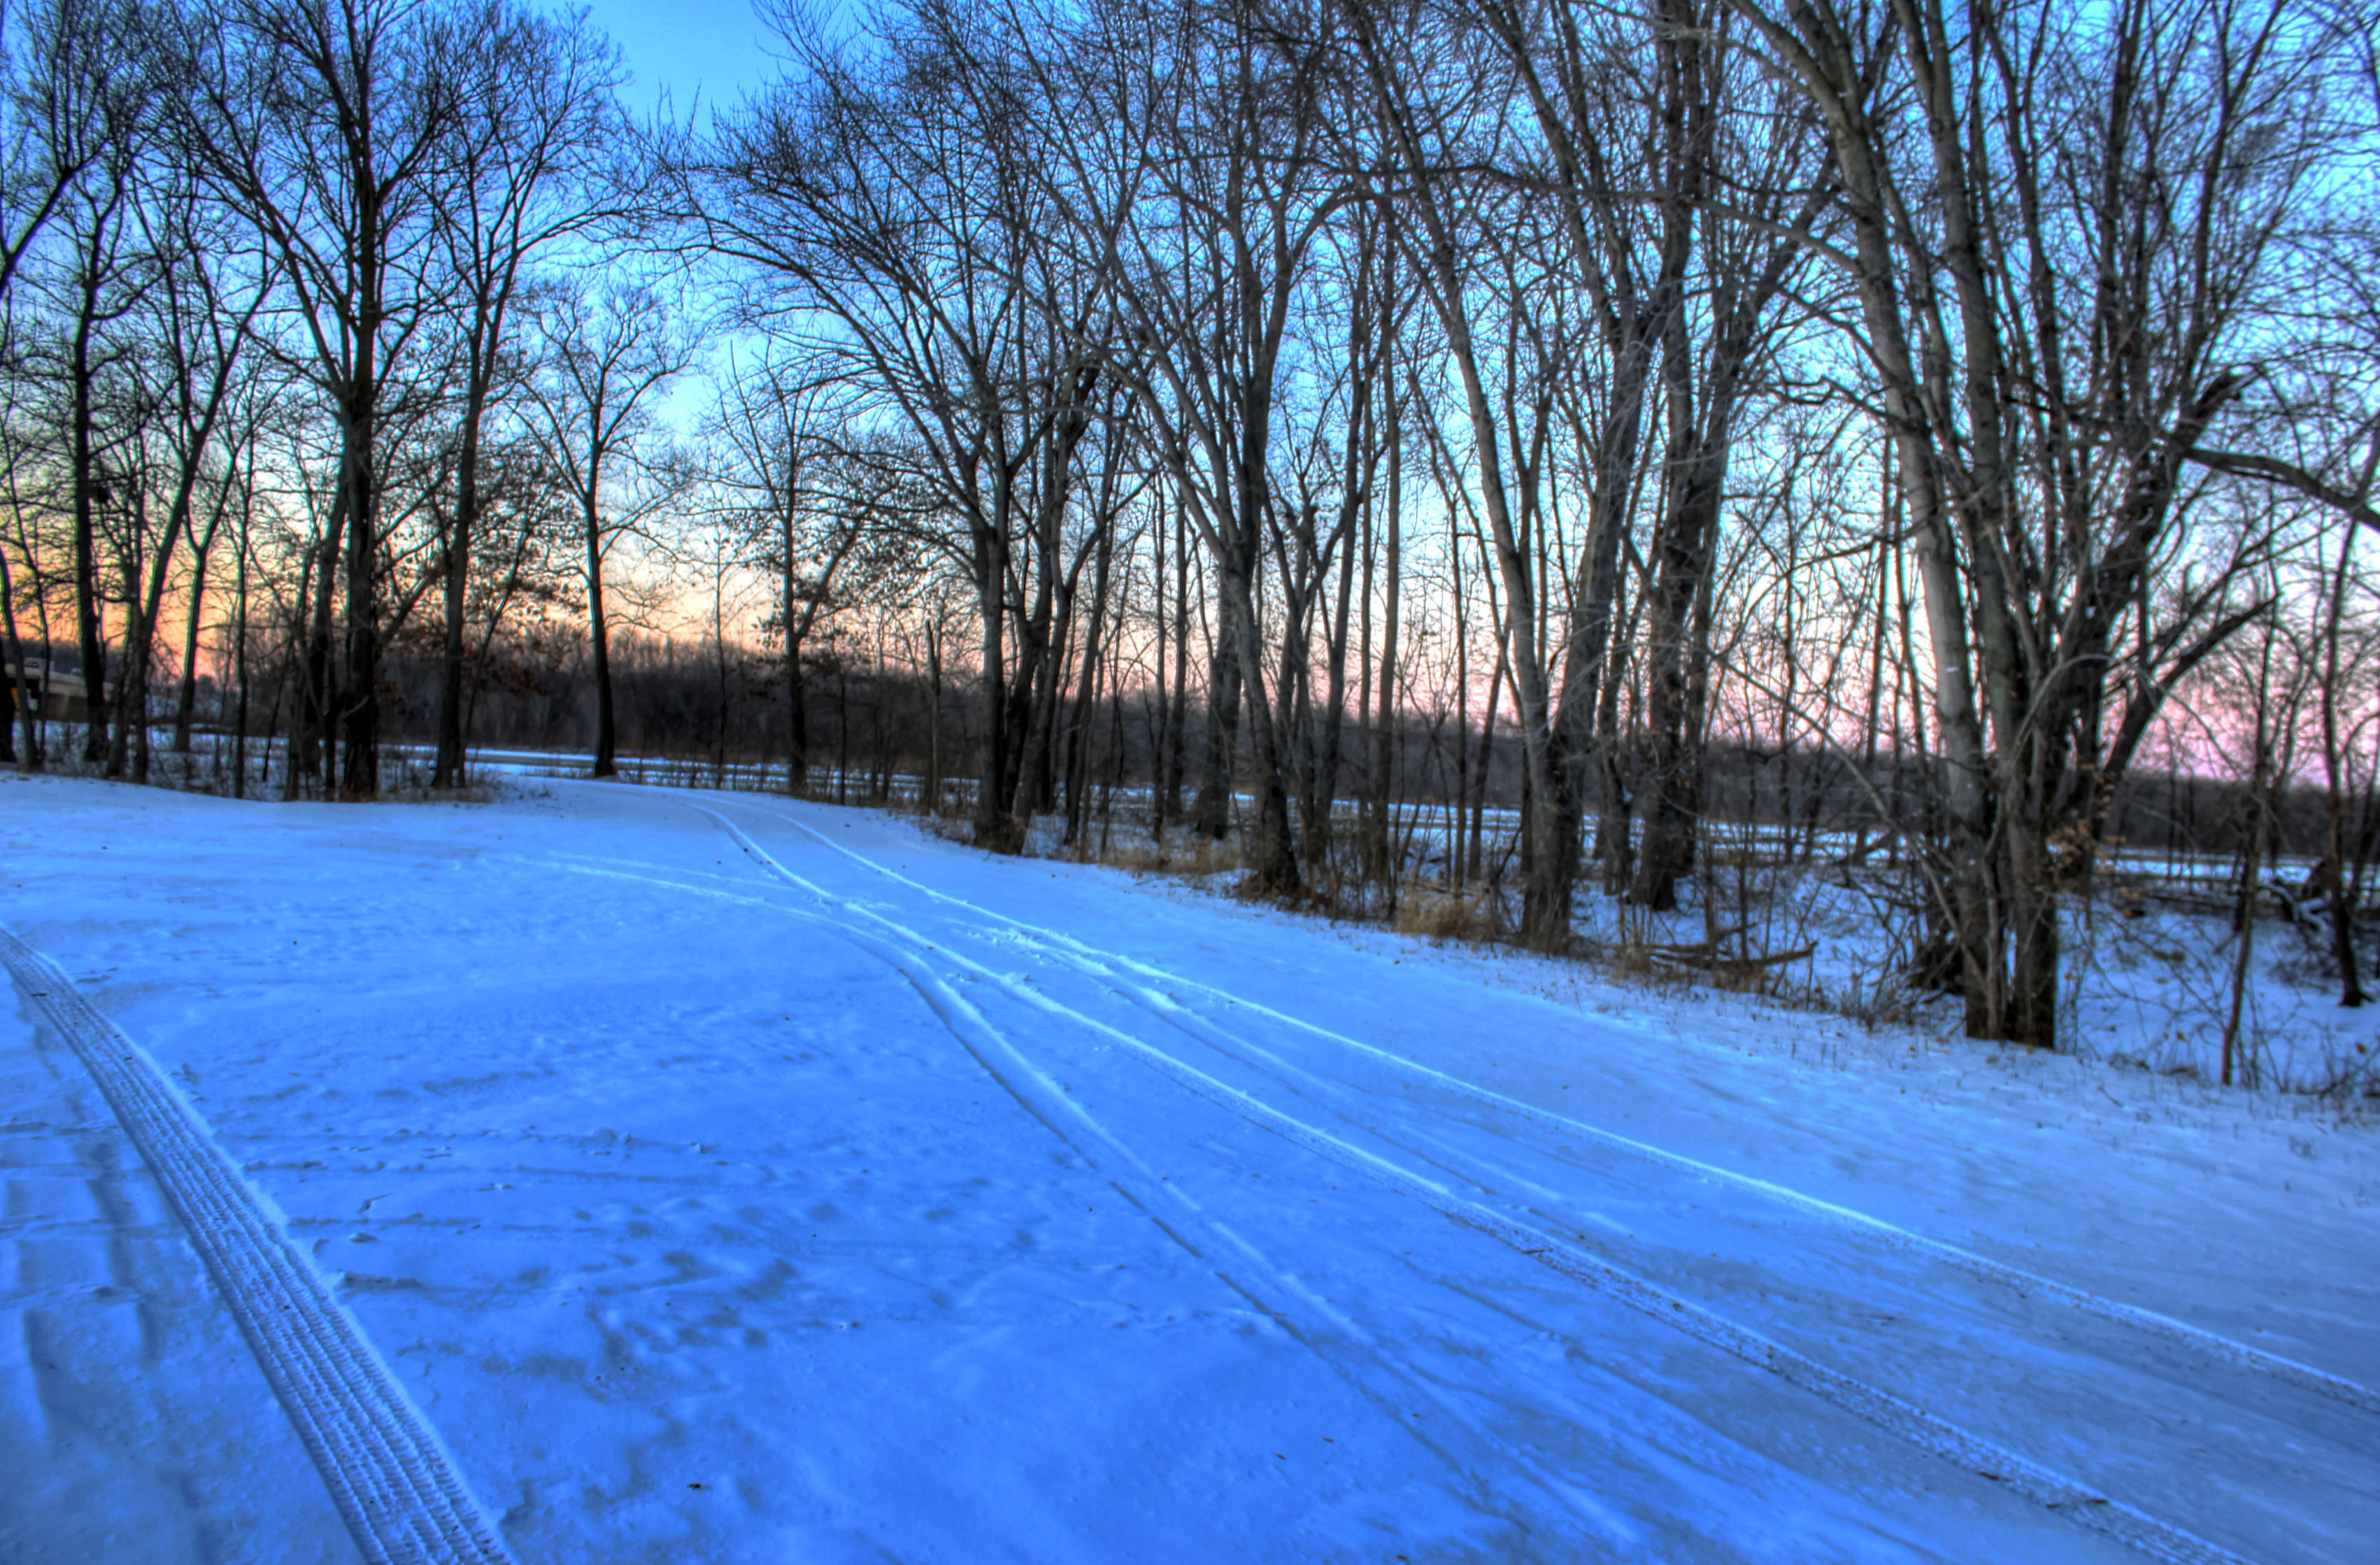 File:Gfp-wisconsin-frozen-forest.jpg - Wikimedia Commons